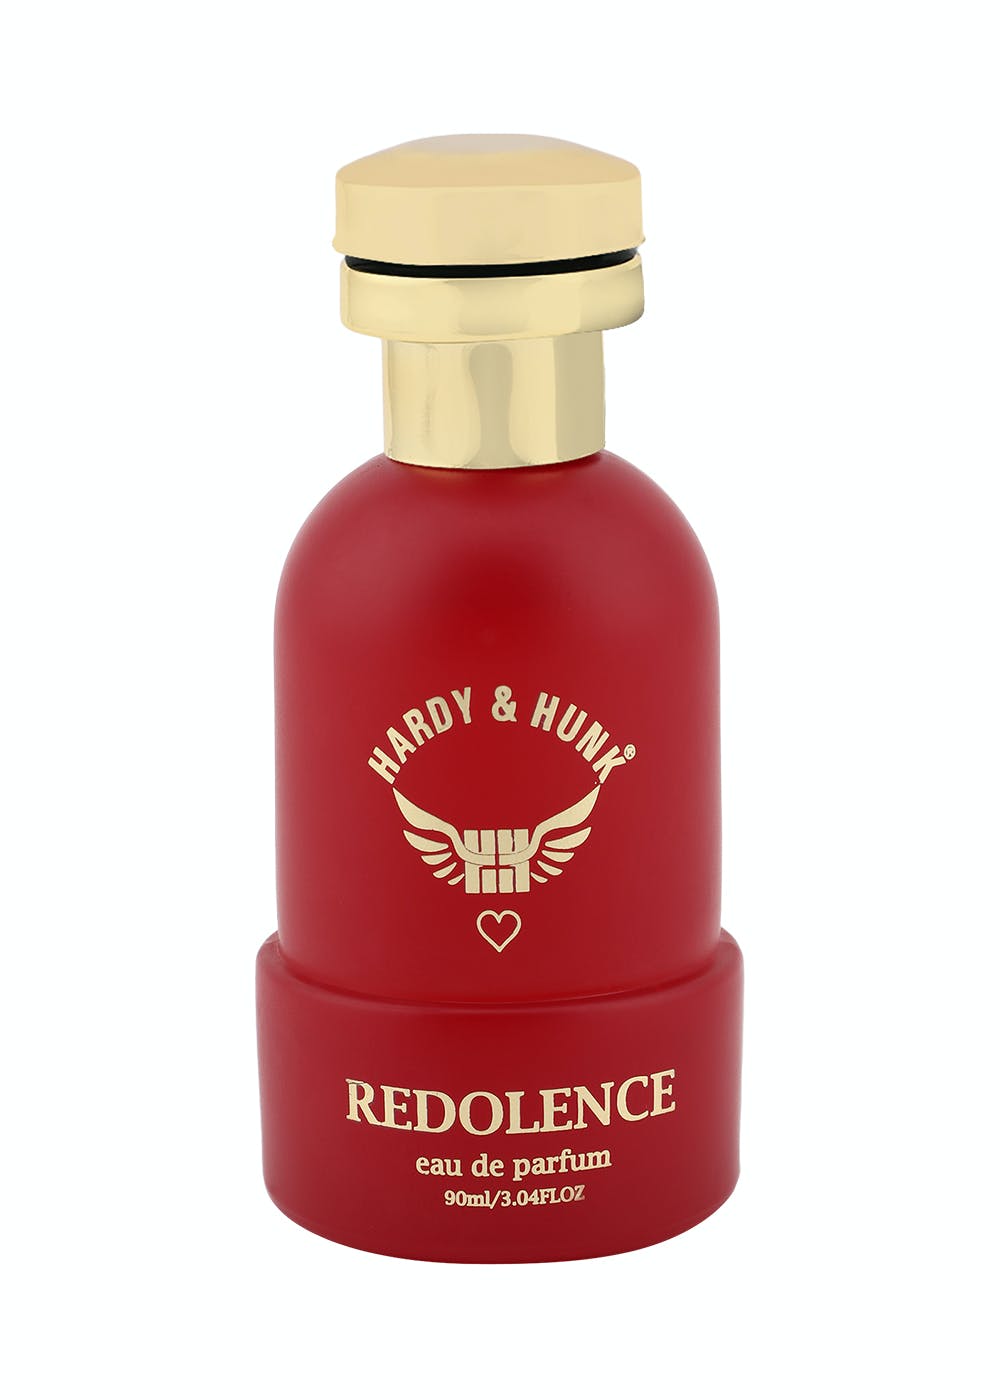 Redolence - The Power Of Fragrance - Luxury Fragrance For Men & Women, Eau De Parfum (90ml)